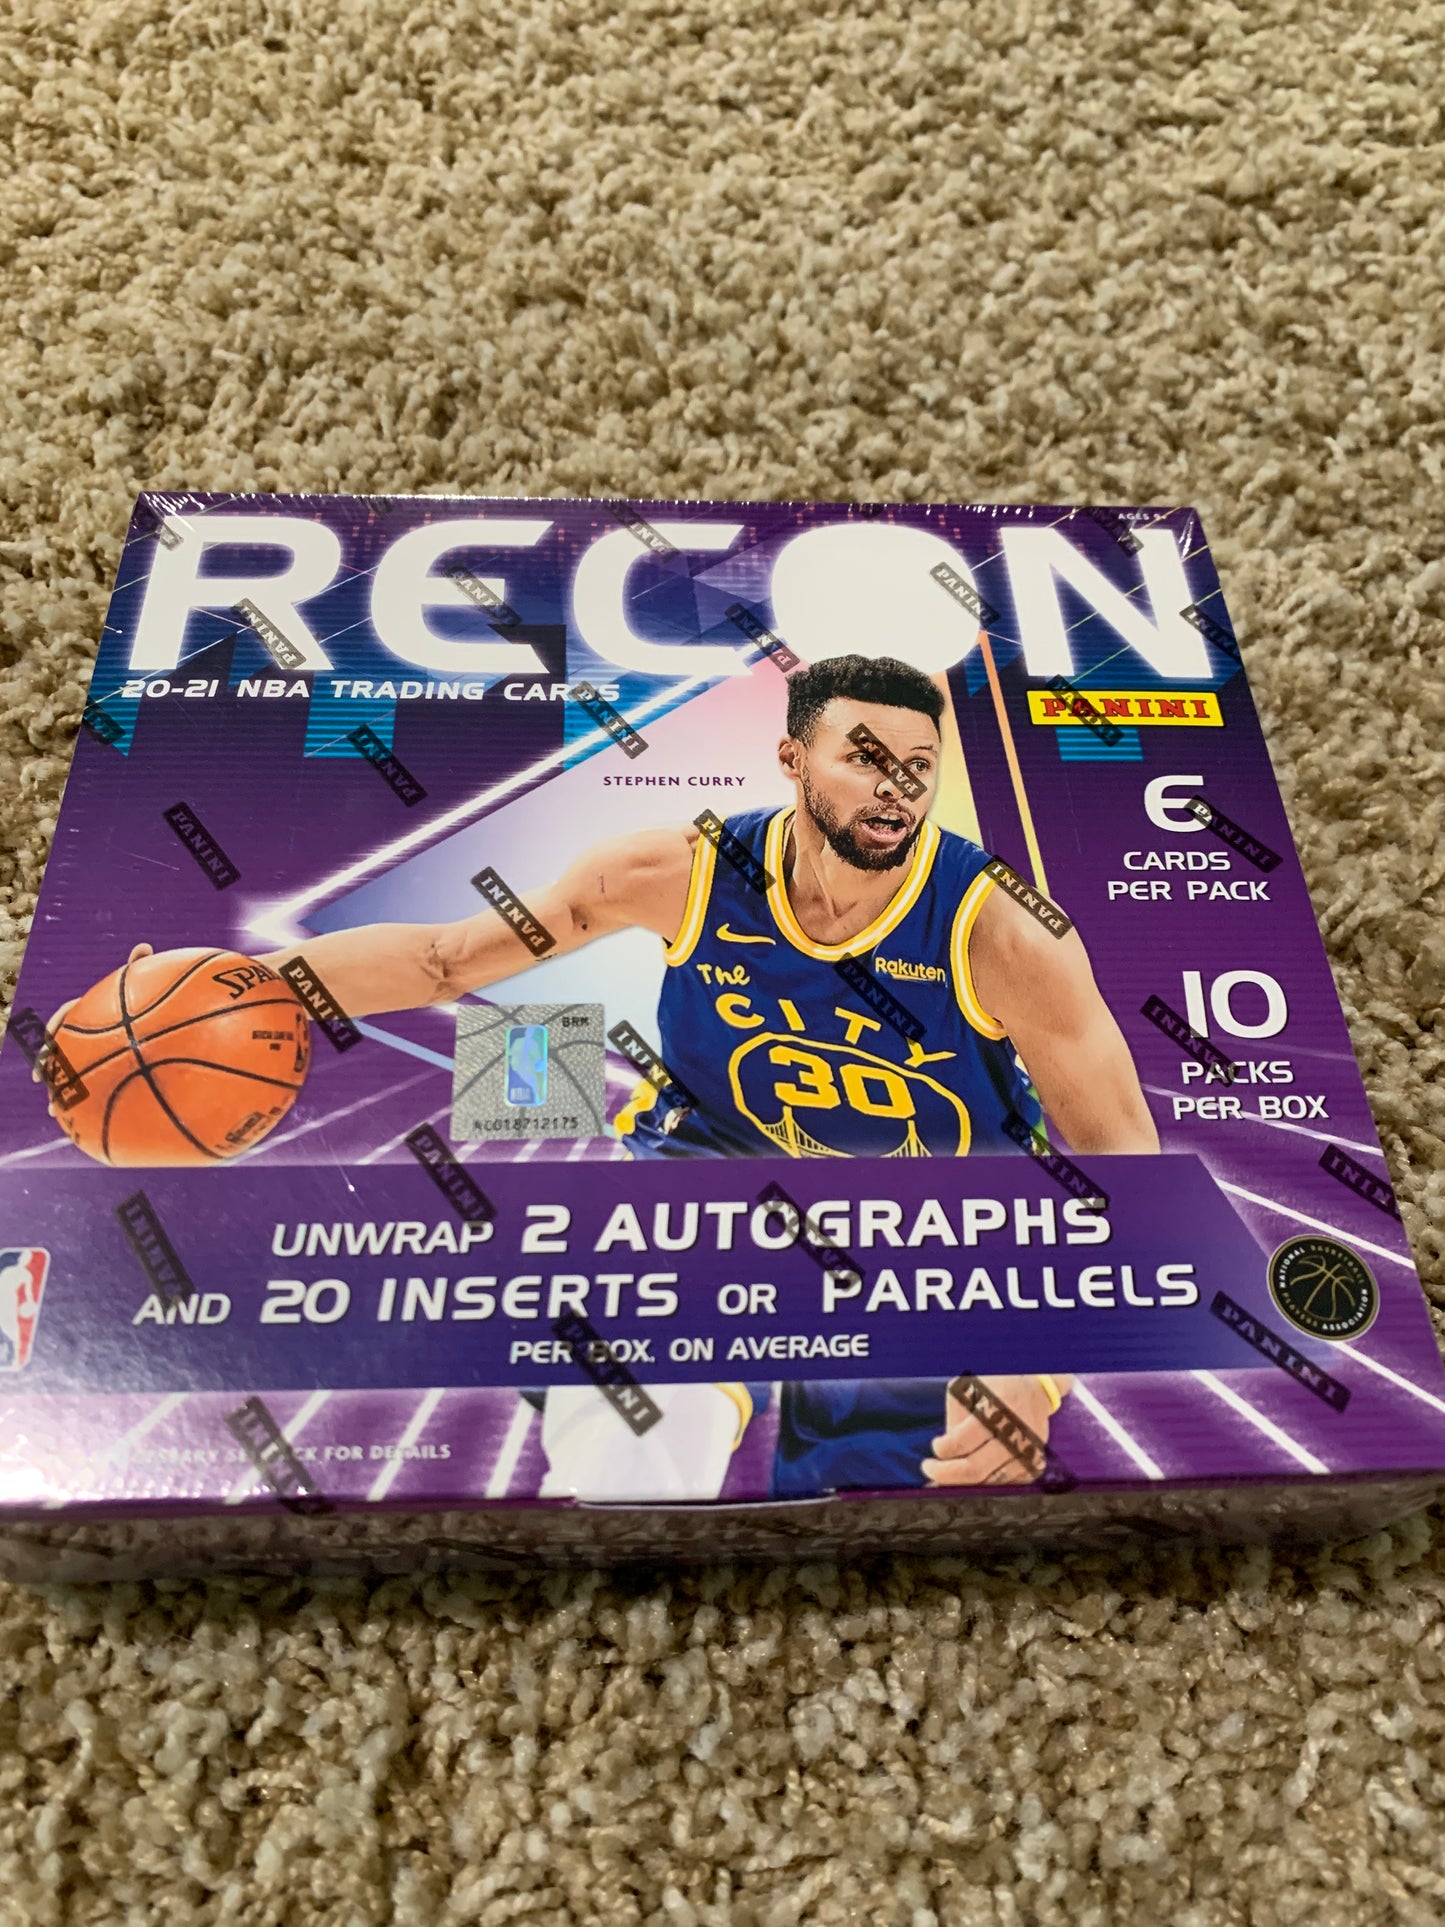 2020-21 Panini Recon Basketball Factory Sealed Hobby Box (1 box)